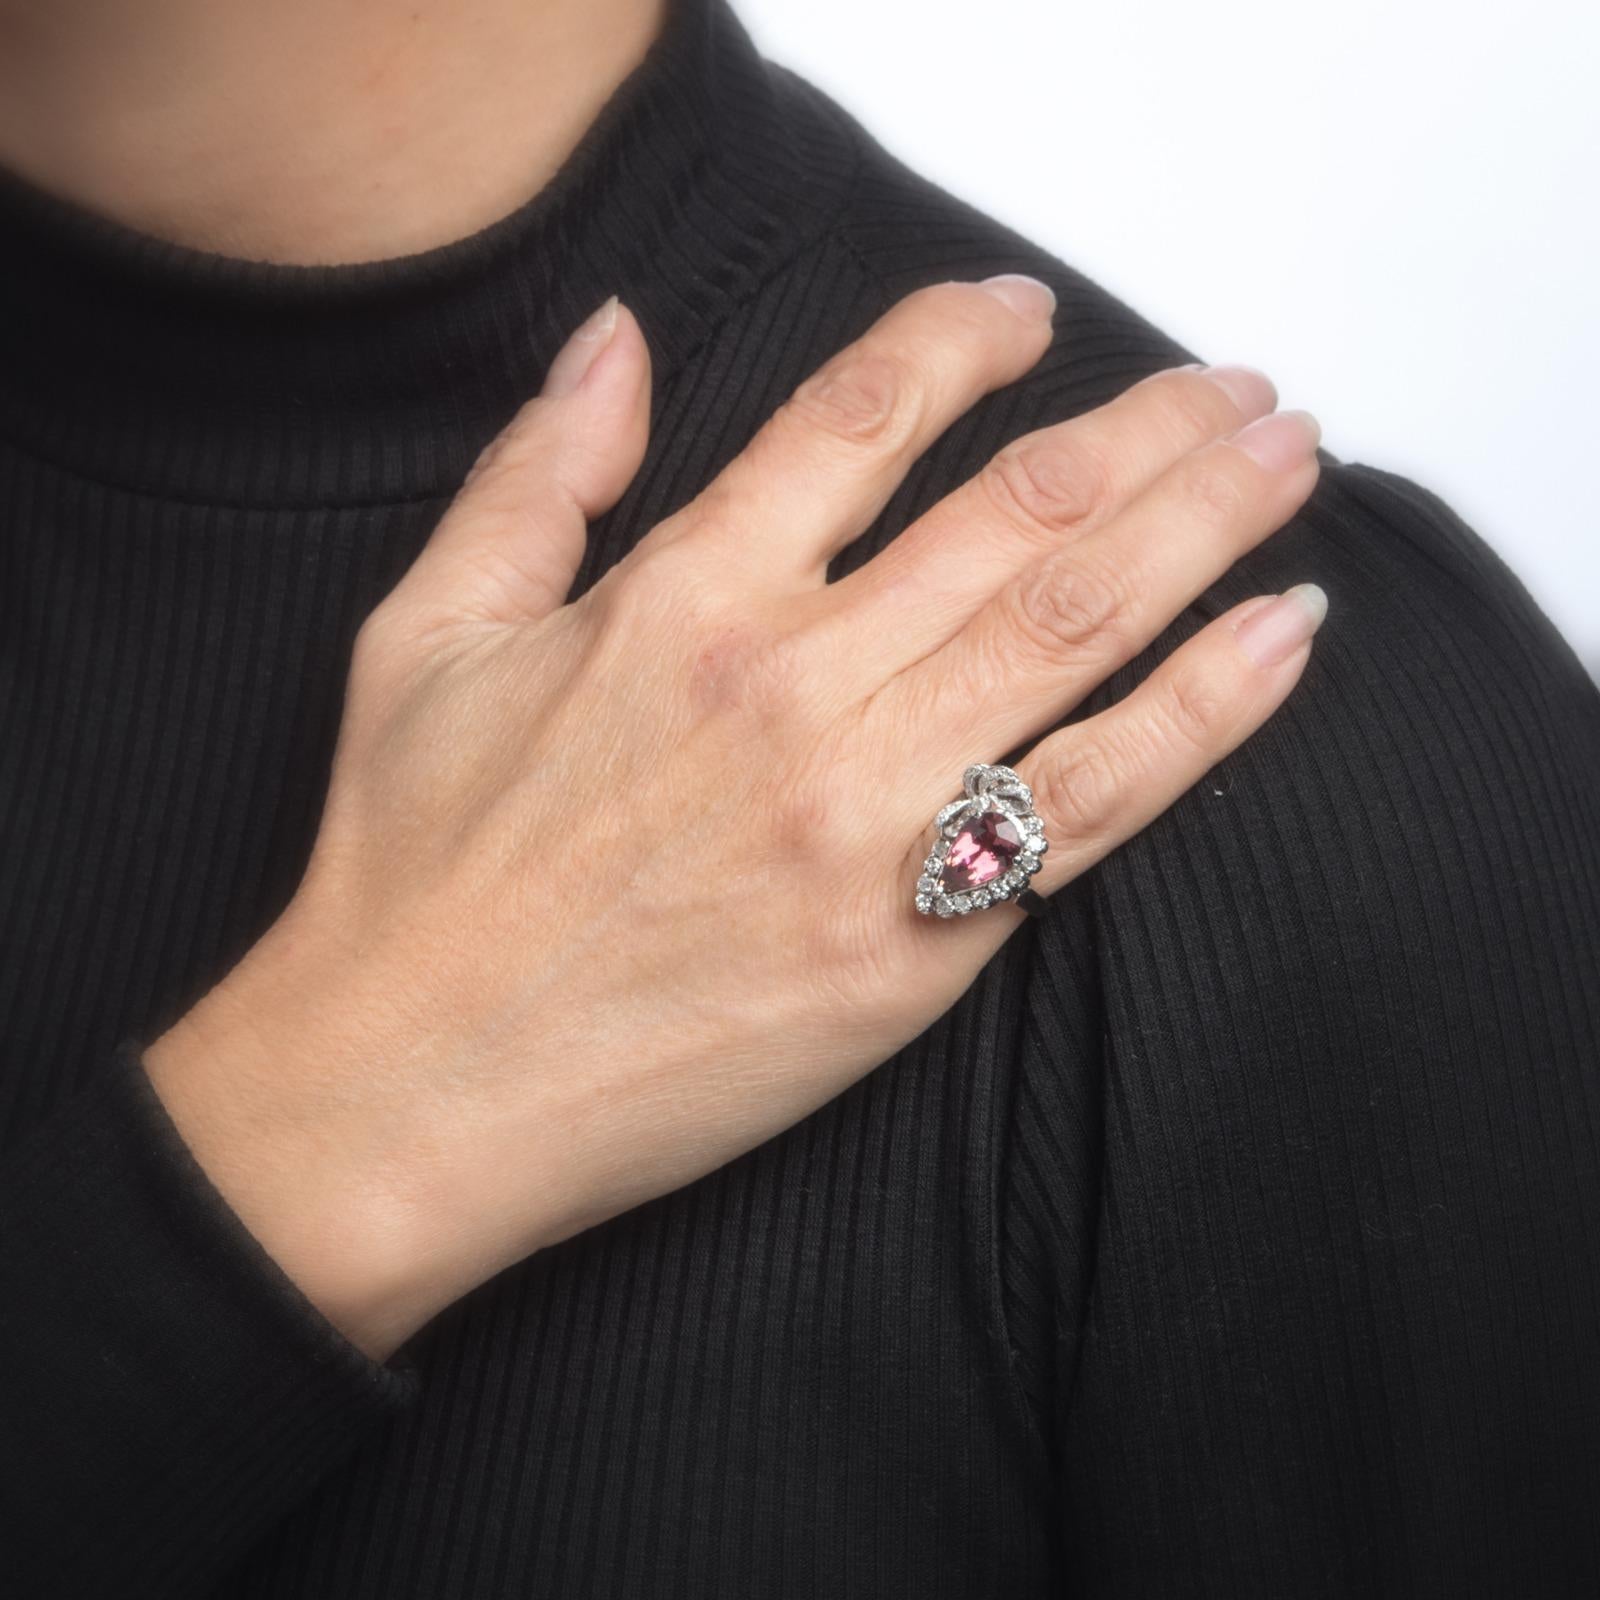 Women's Vintage Pink Tourmaline Diamond Ring Cocktail 10k White Gold Fine Jewelry